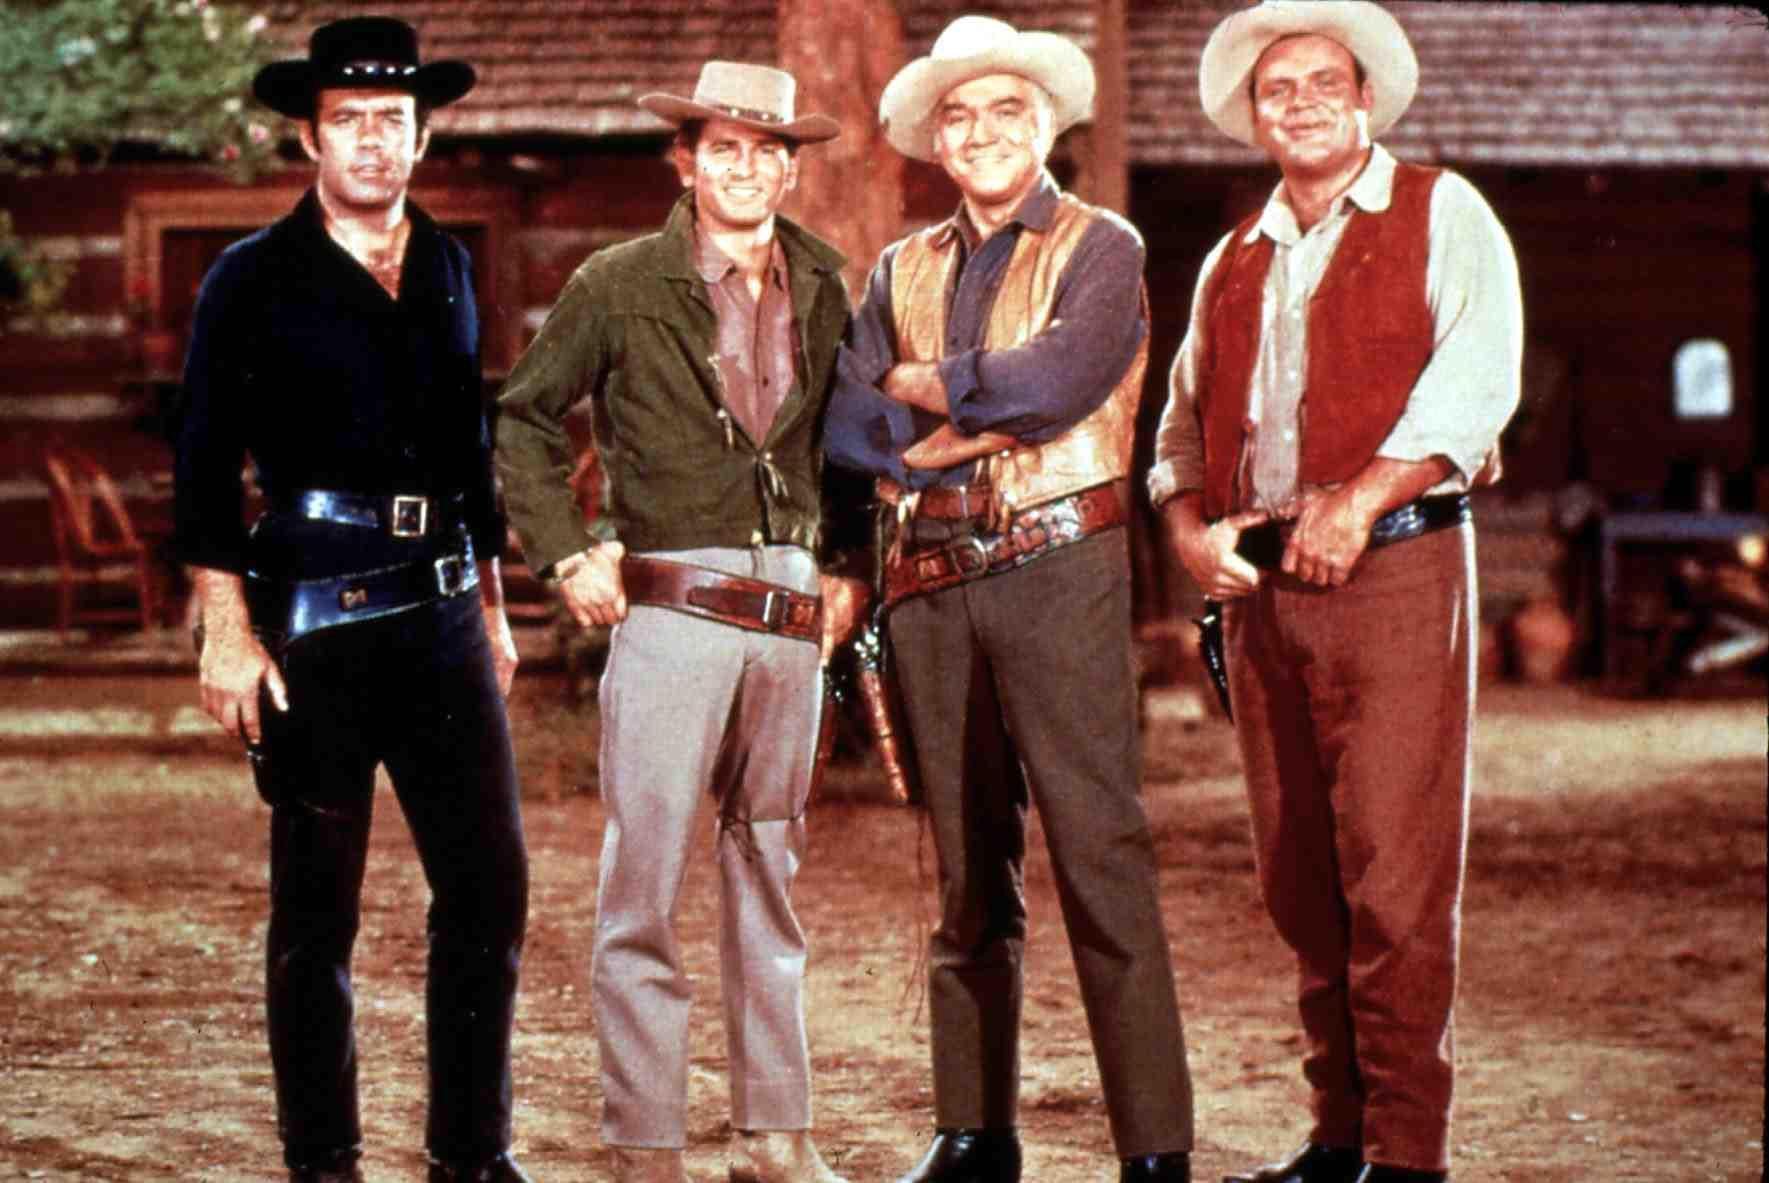 Pernell Roberts, Michael Landon, Lorne Greene, and Dan Blocker in Western clothing in 'Bonanza'